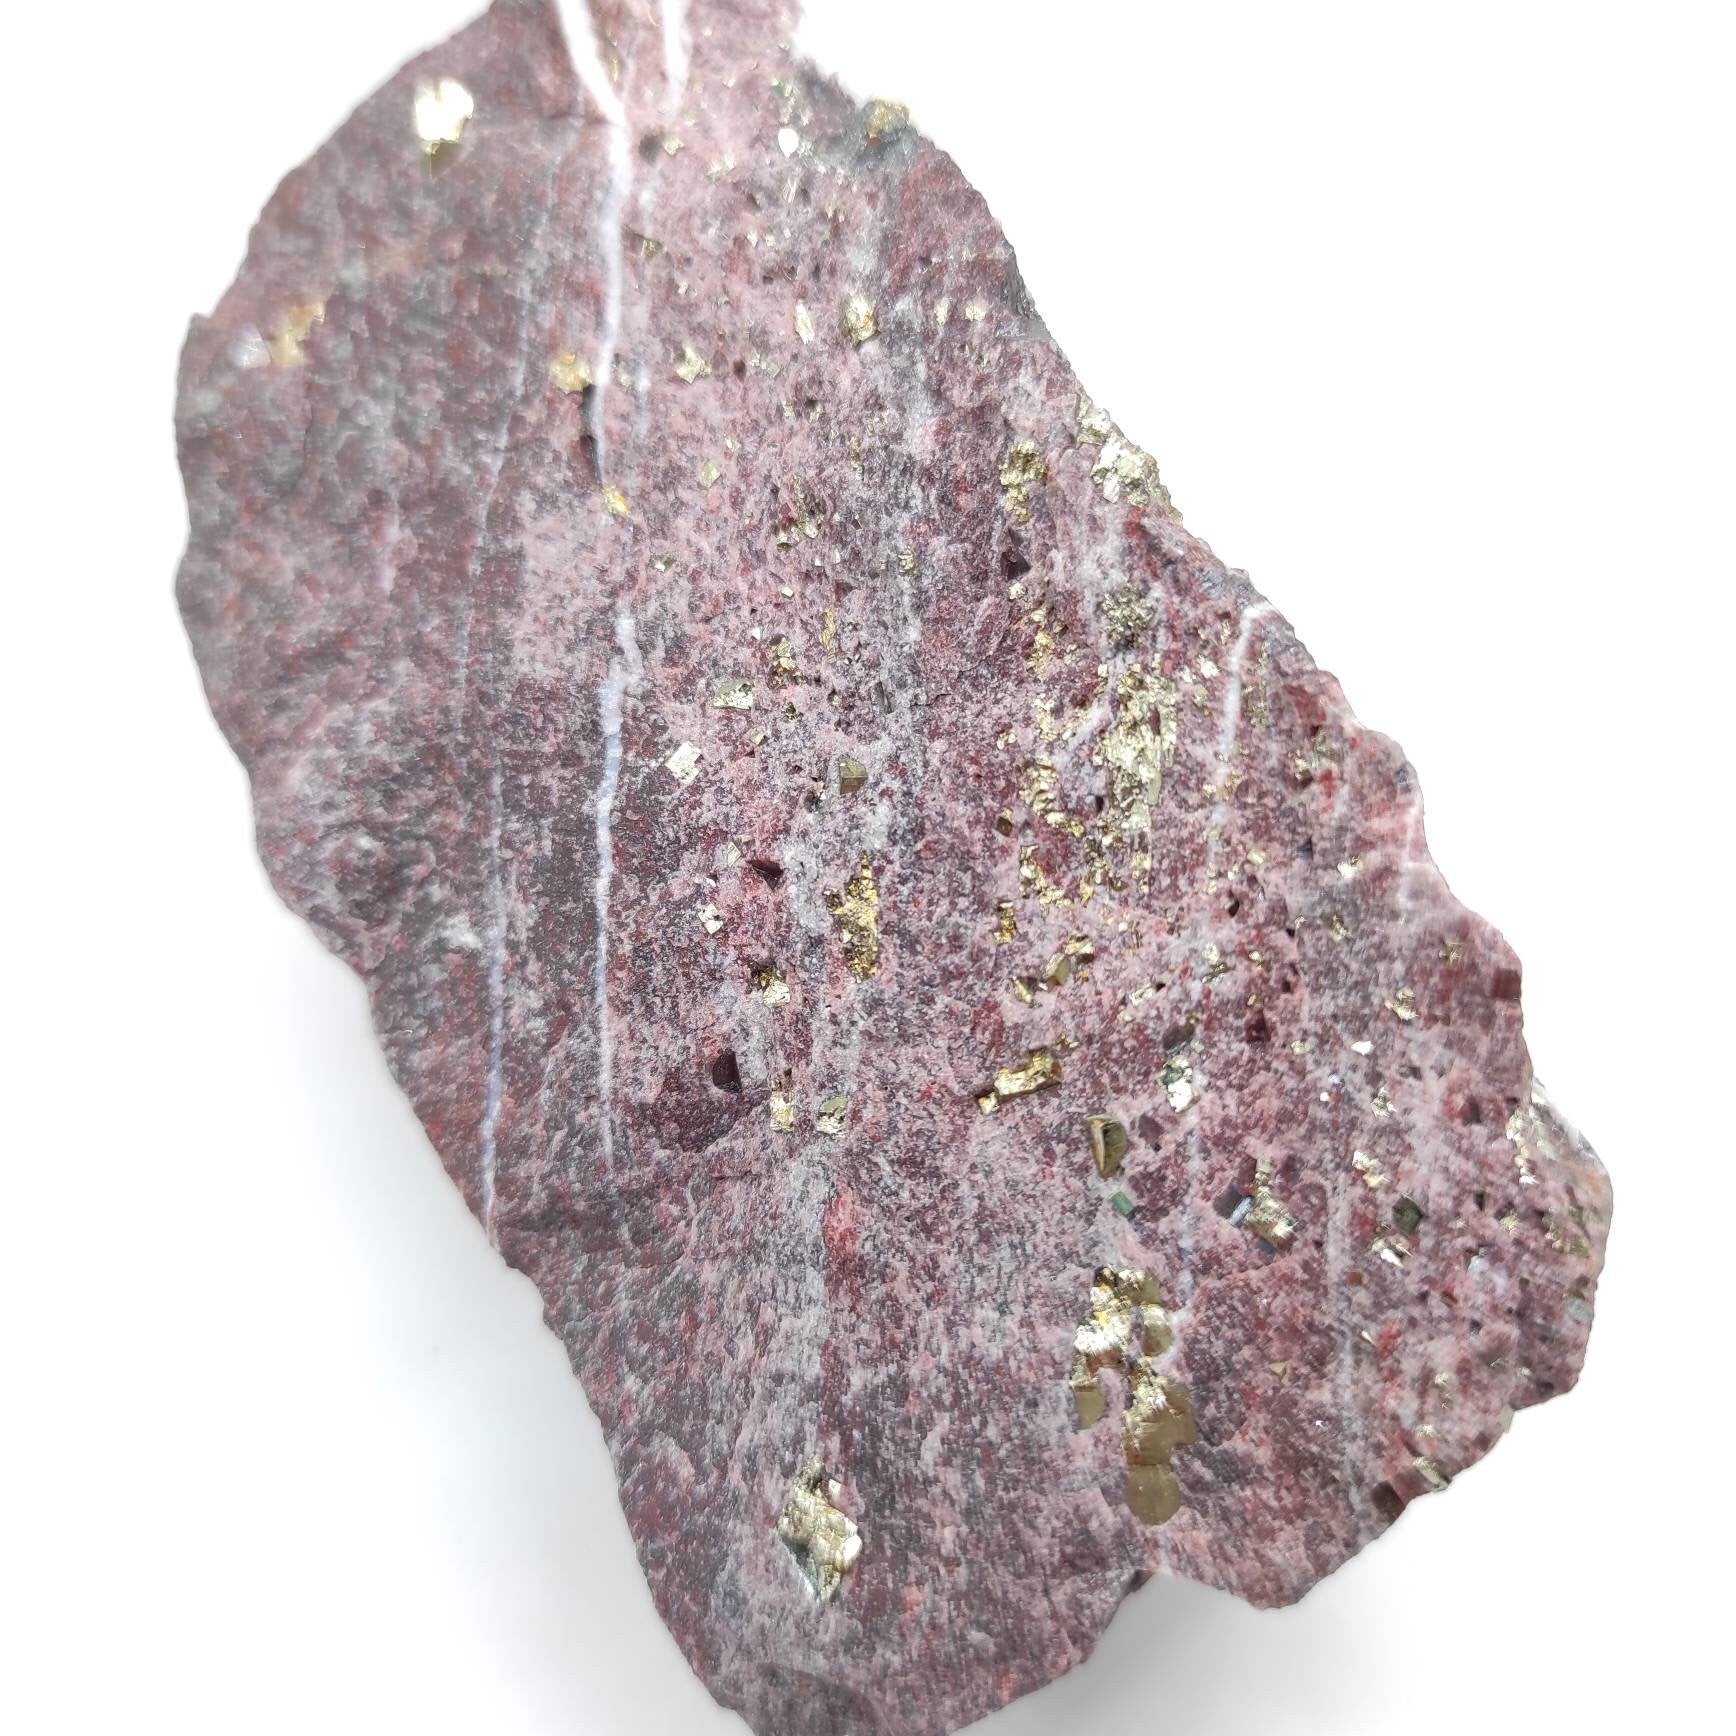 Exclusive Find! 495g Pyrite and Molybdenite in Red Quartzite - Sherbrooke, Quebec, Canada - Quartz Crystal Cluster Specimen - Rare Mineral